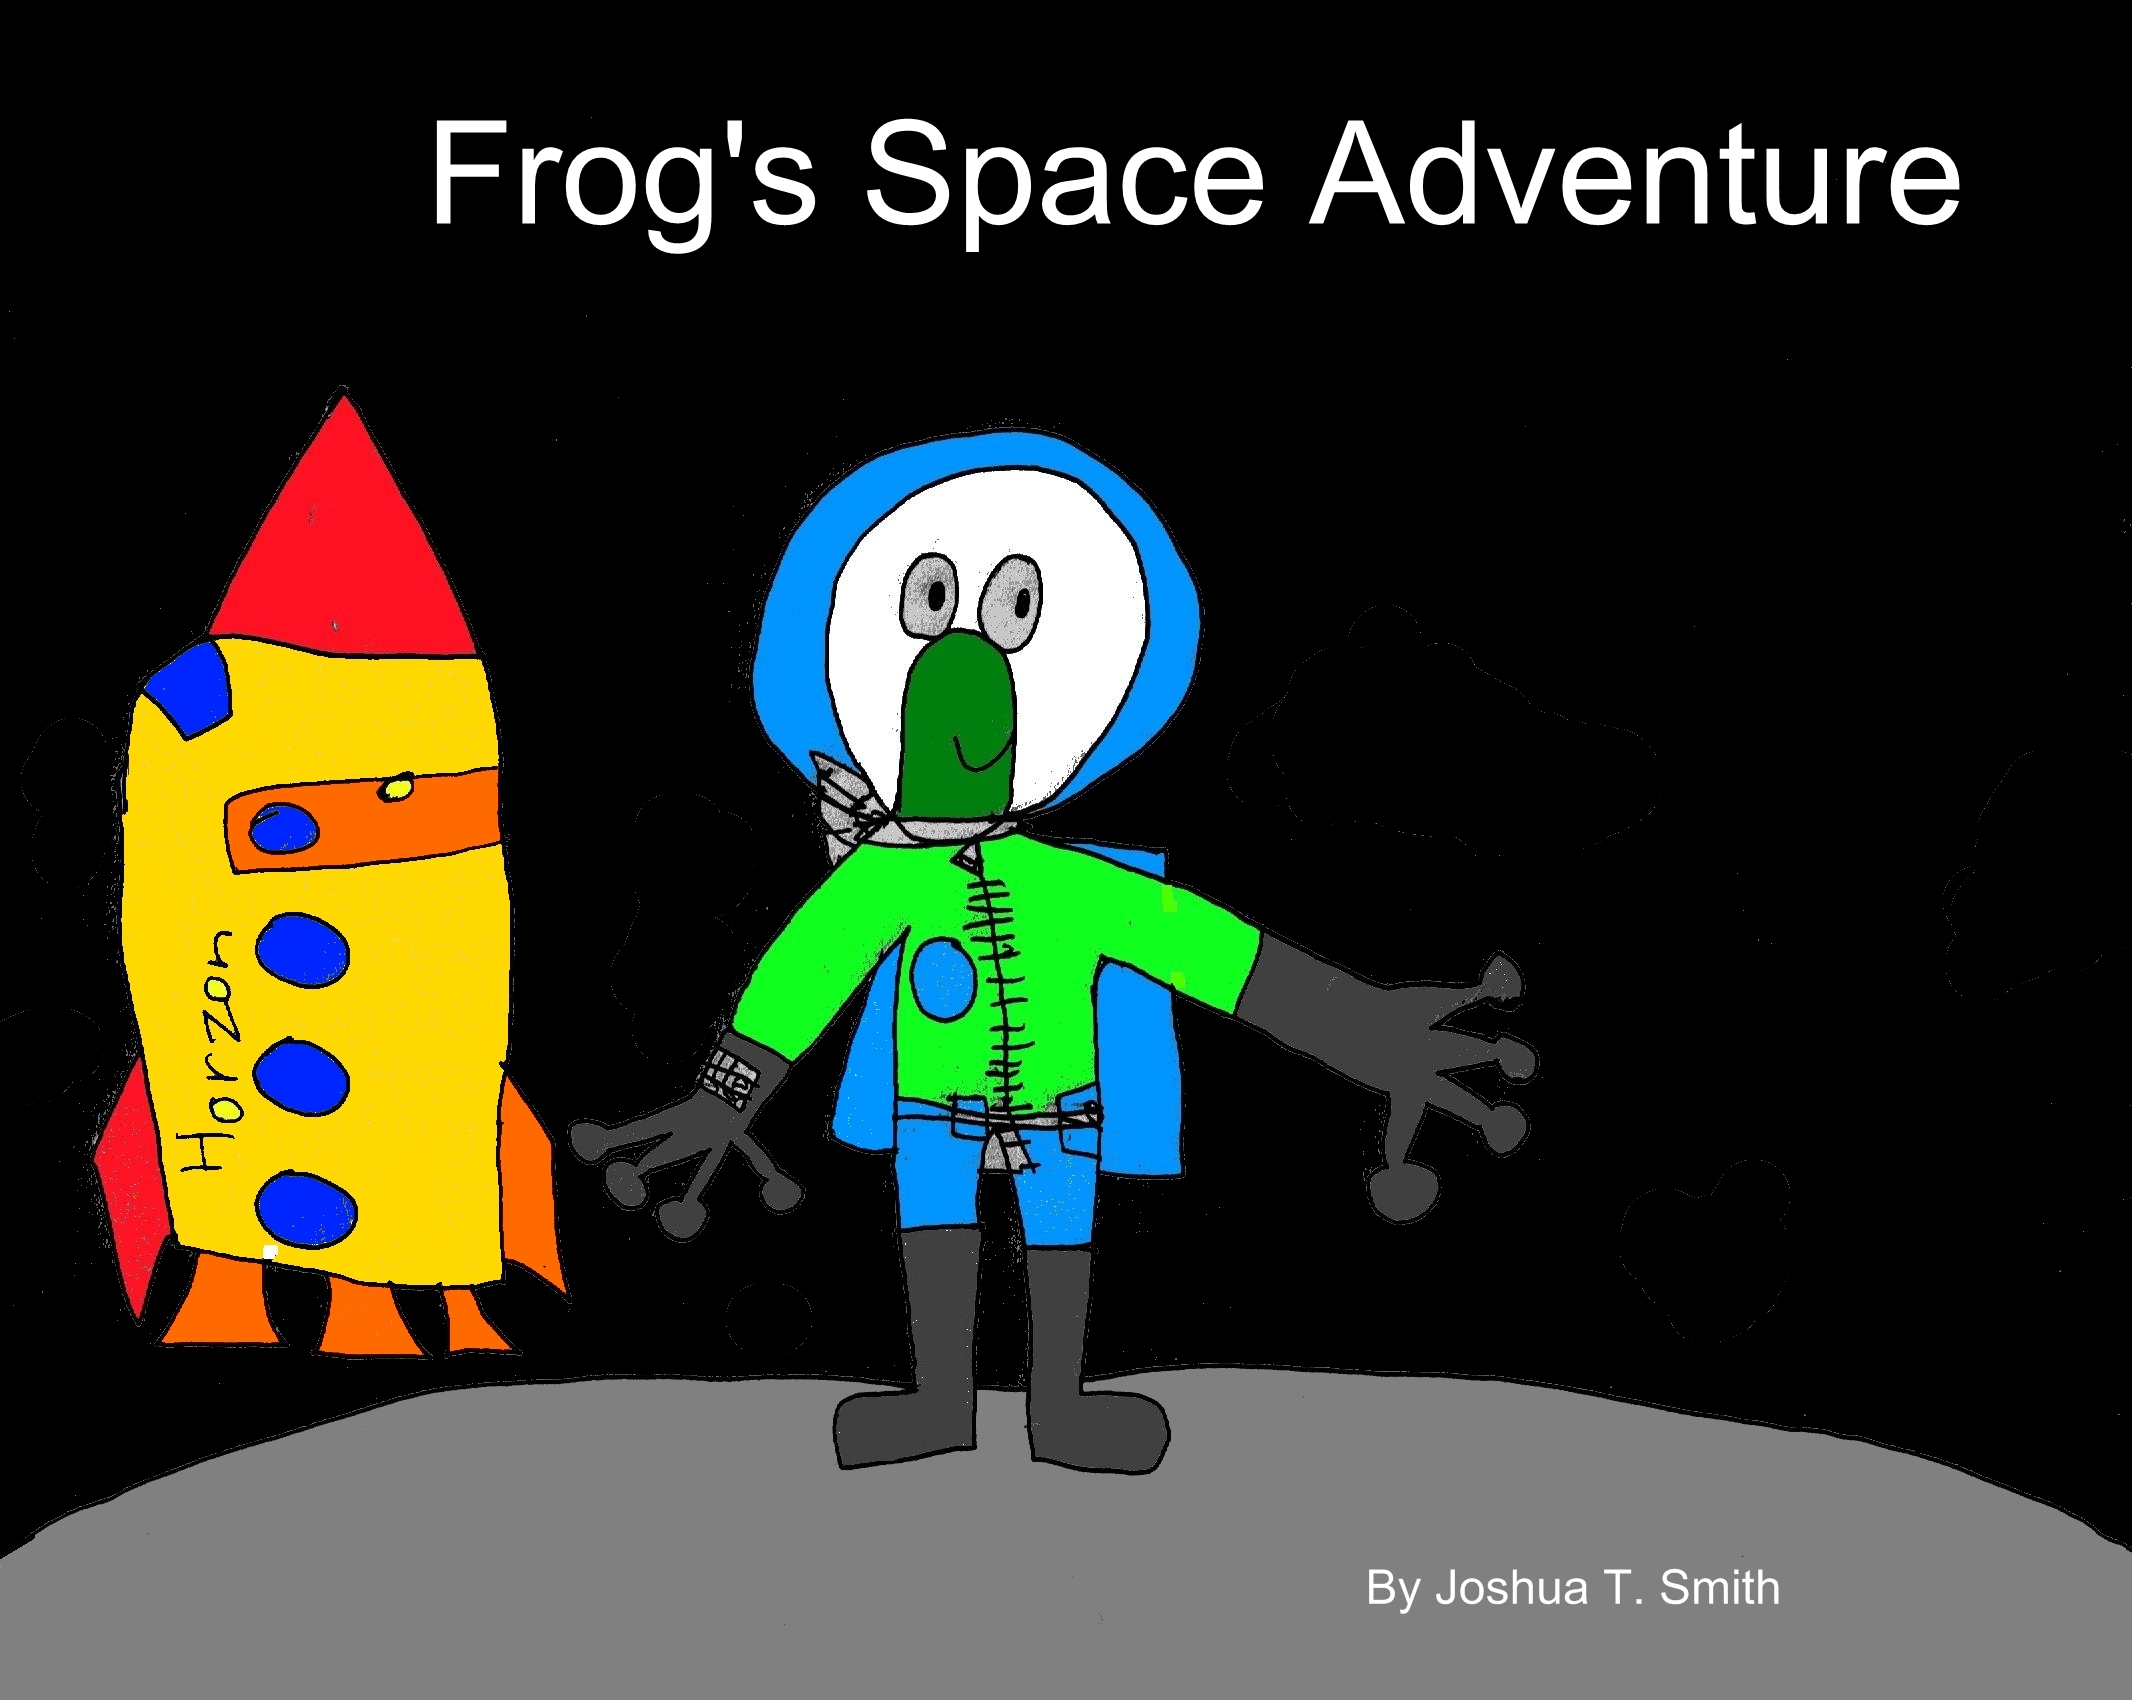 Frog's Space Adventure